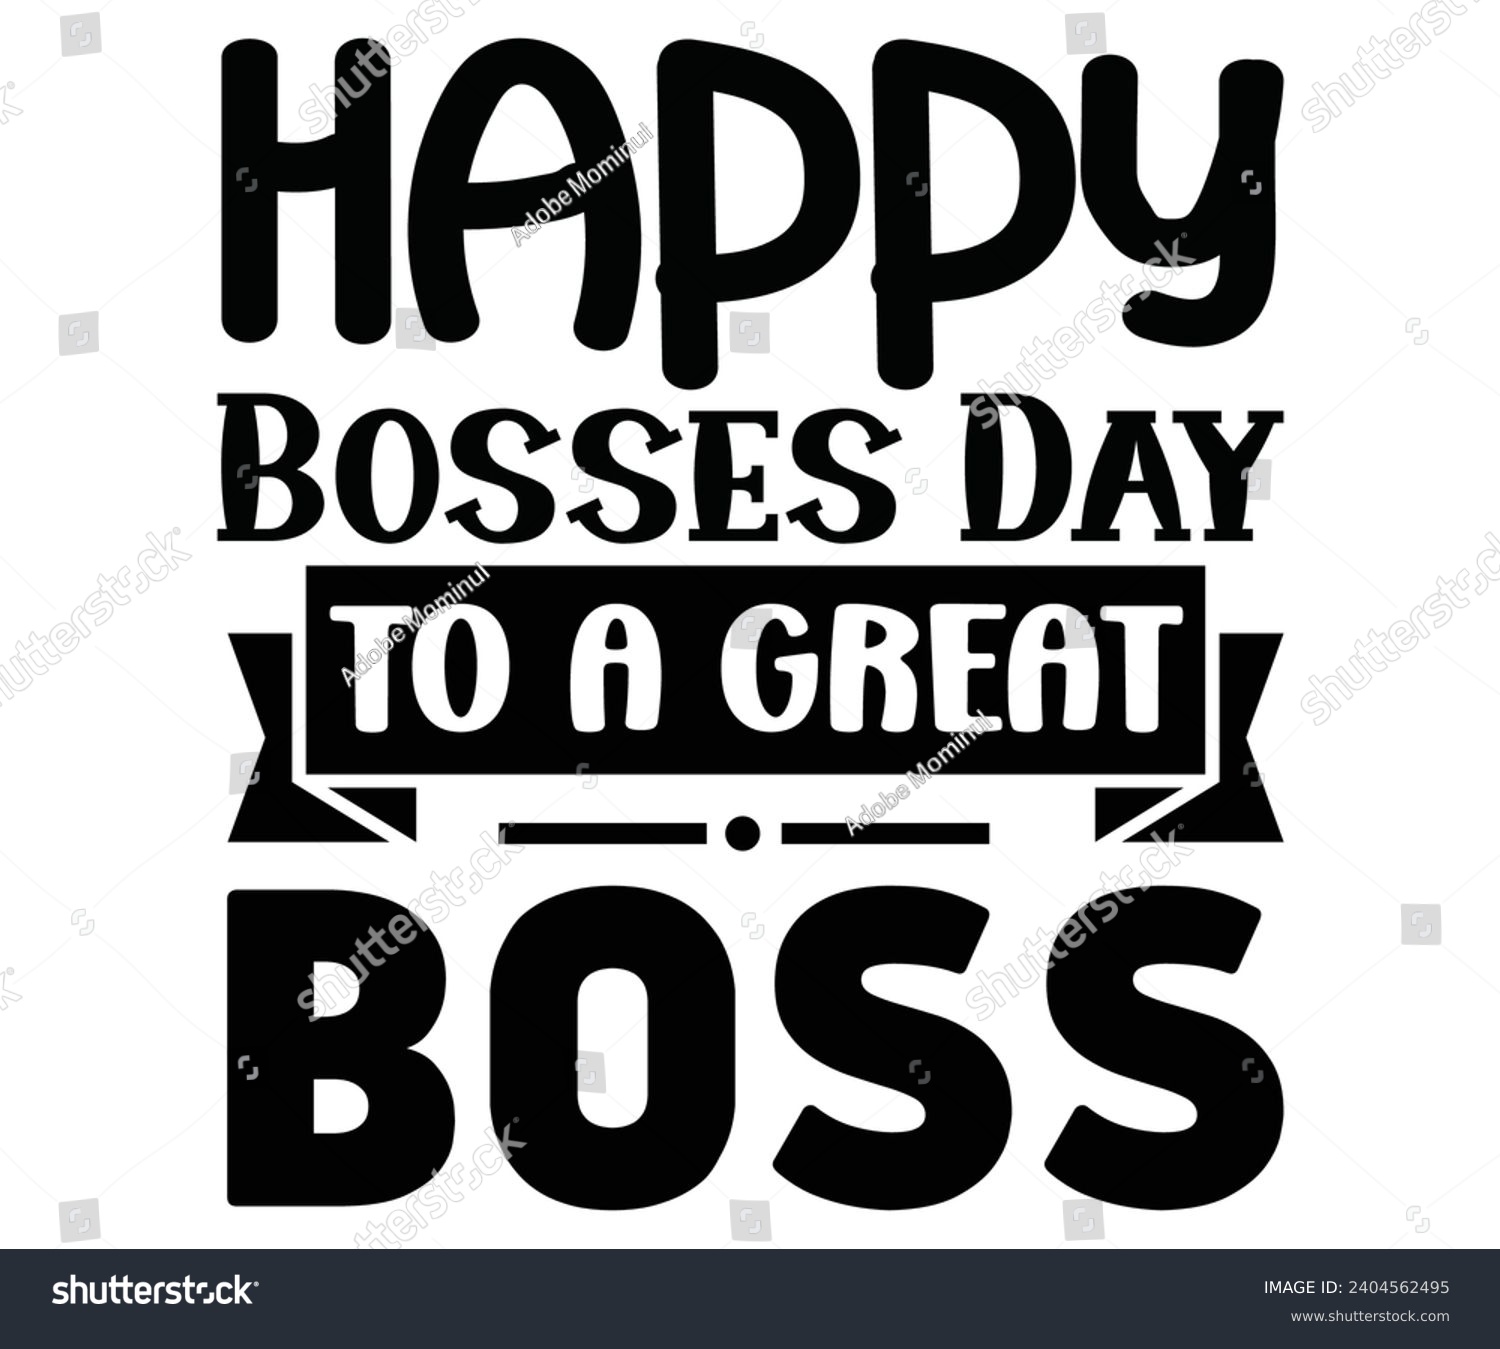 SVG of Happy Bosses Day To A Great Boss svg,Happy Boss Day svg,Boss Saying Quotes,Boss Day T-shirt,Gift for Boss,Great Jobs,Happy Bosses Day t-shirt,Girl Boss Shirt,Motivational Boss,Cut File,Circut, svg